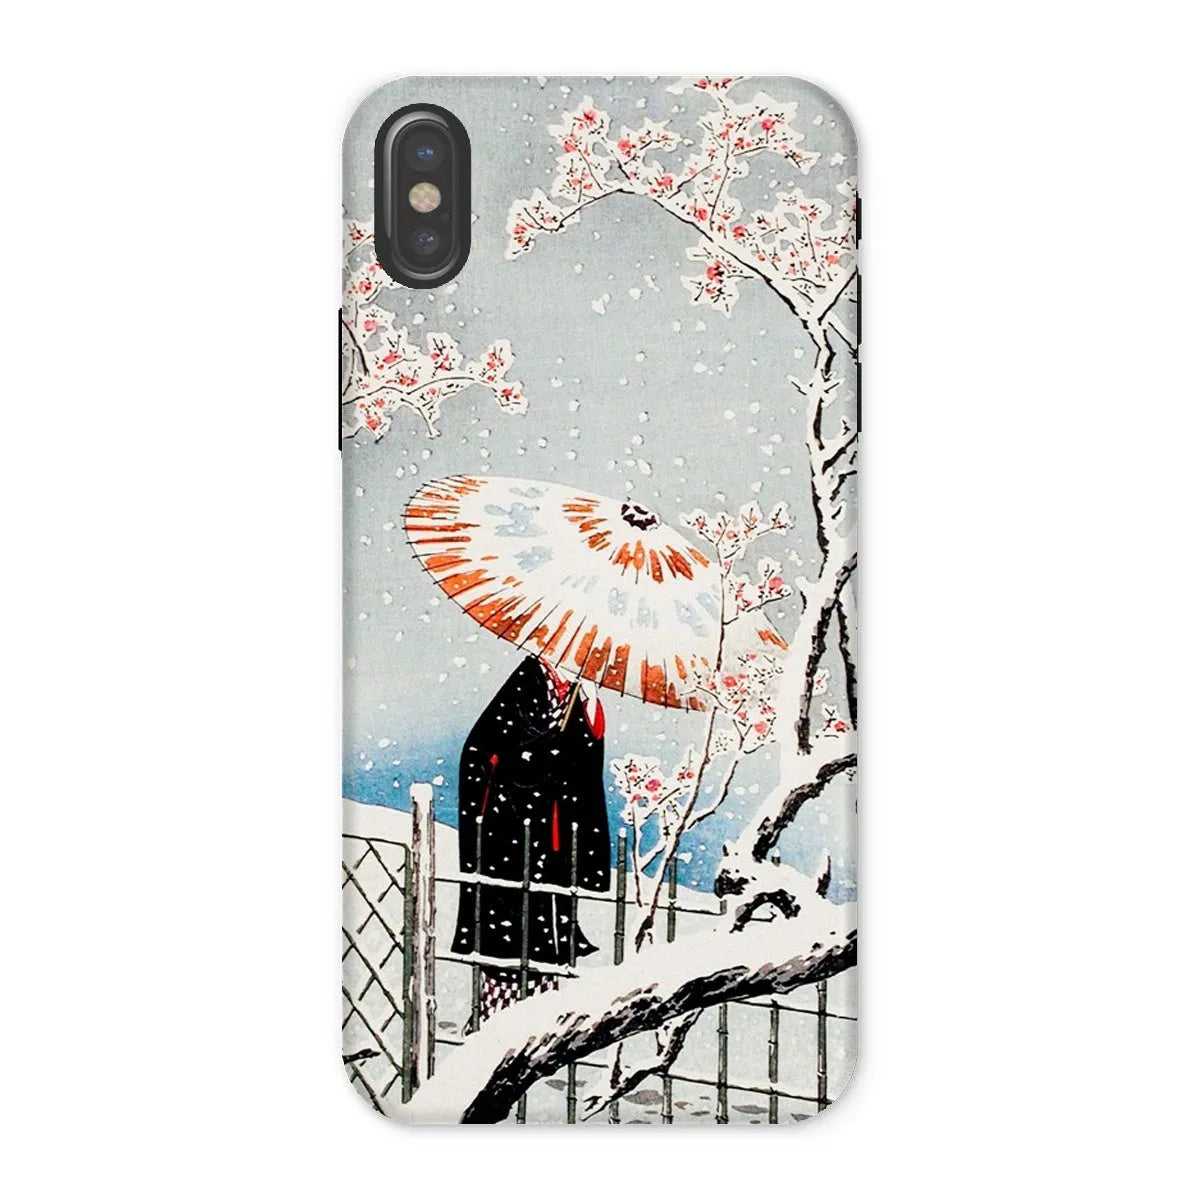 Plum Tree In Snow - Shin-hanga Phone Case - Hiroaki Takahashi - Iphone x / Matte - Mobile Phone Cases - Aesthetic Art